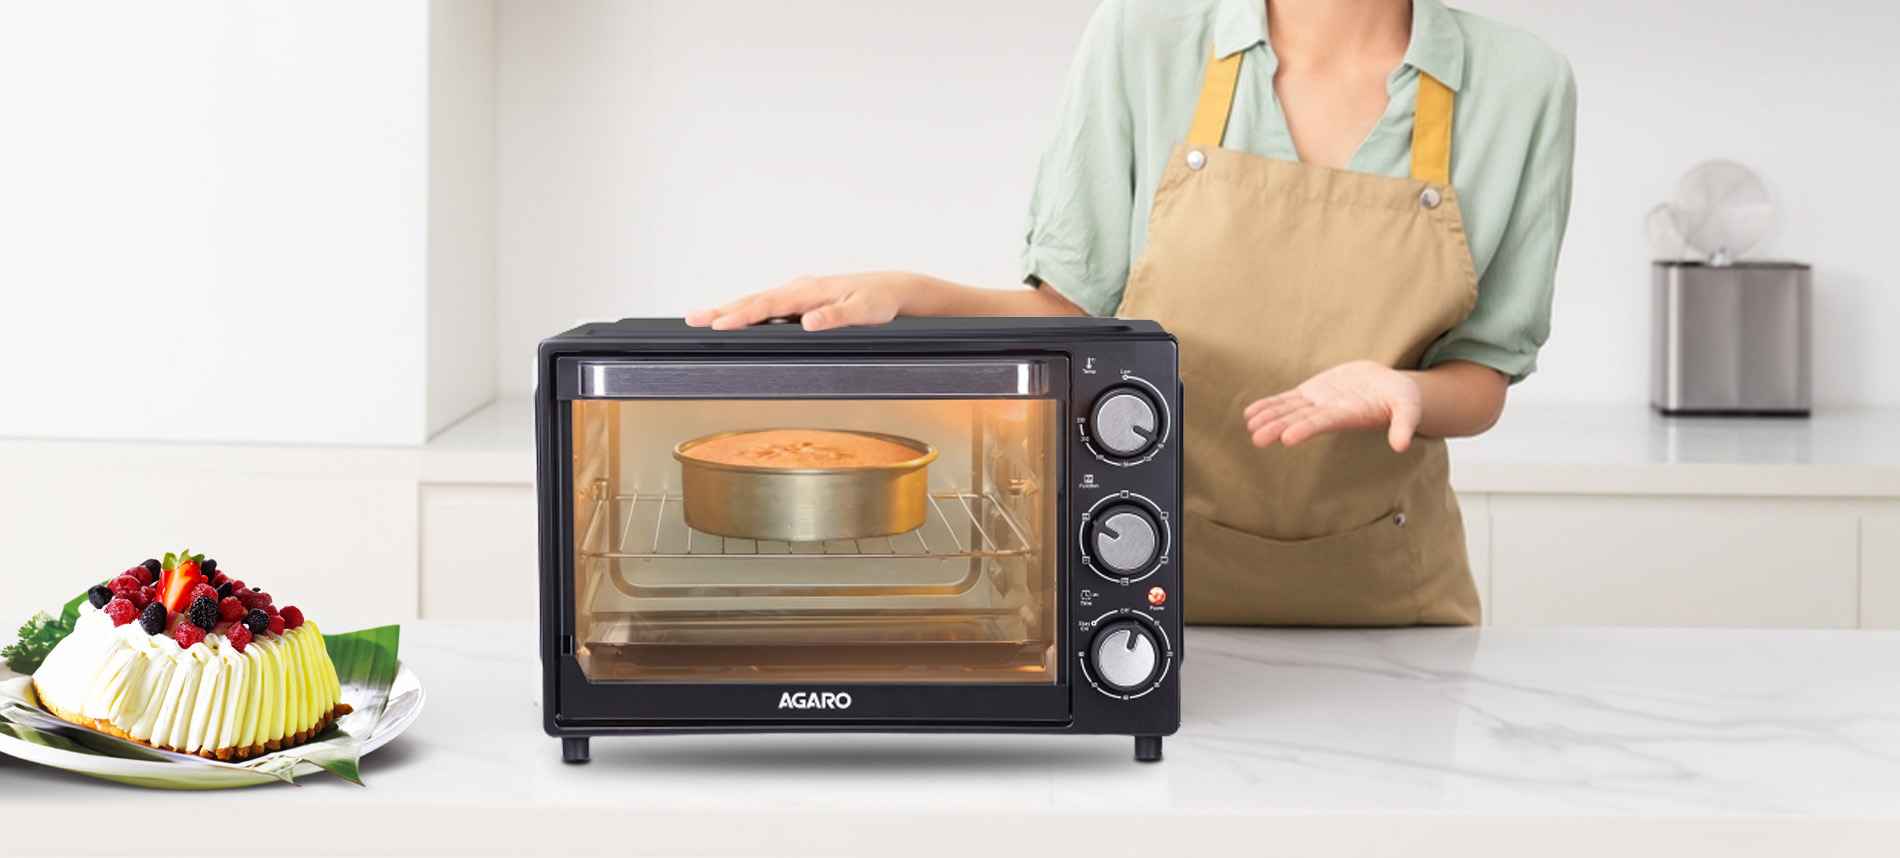 Mastering Cake Baking Temperature: OTG Settings For Baking – Agaro